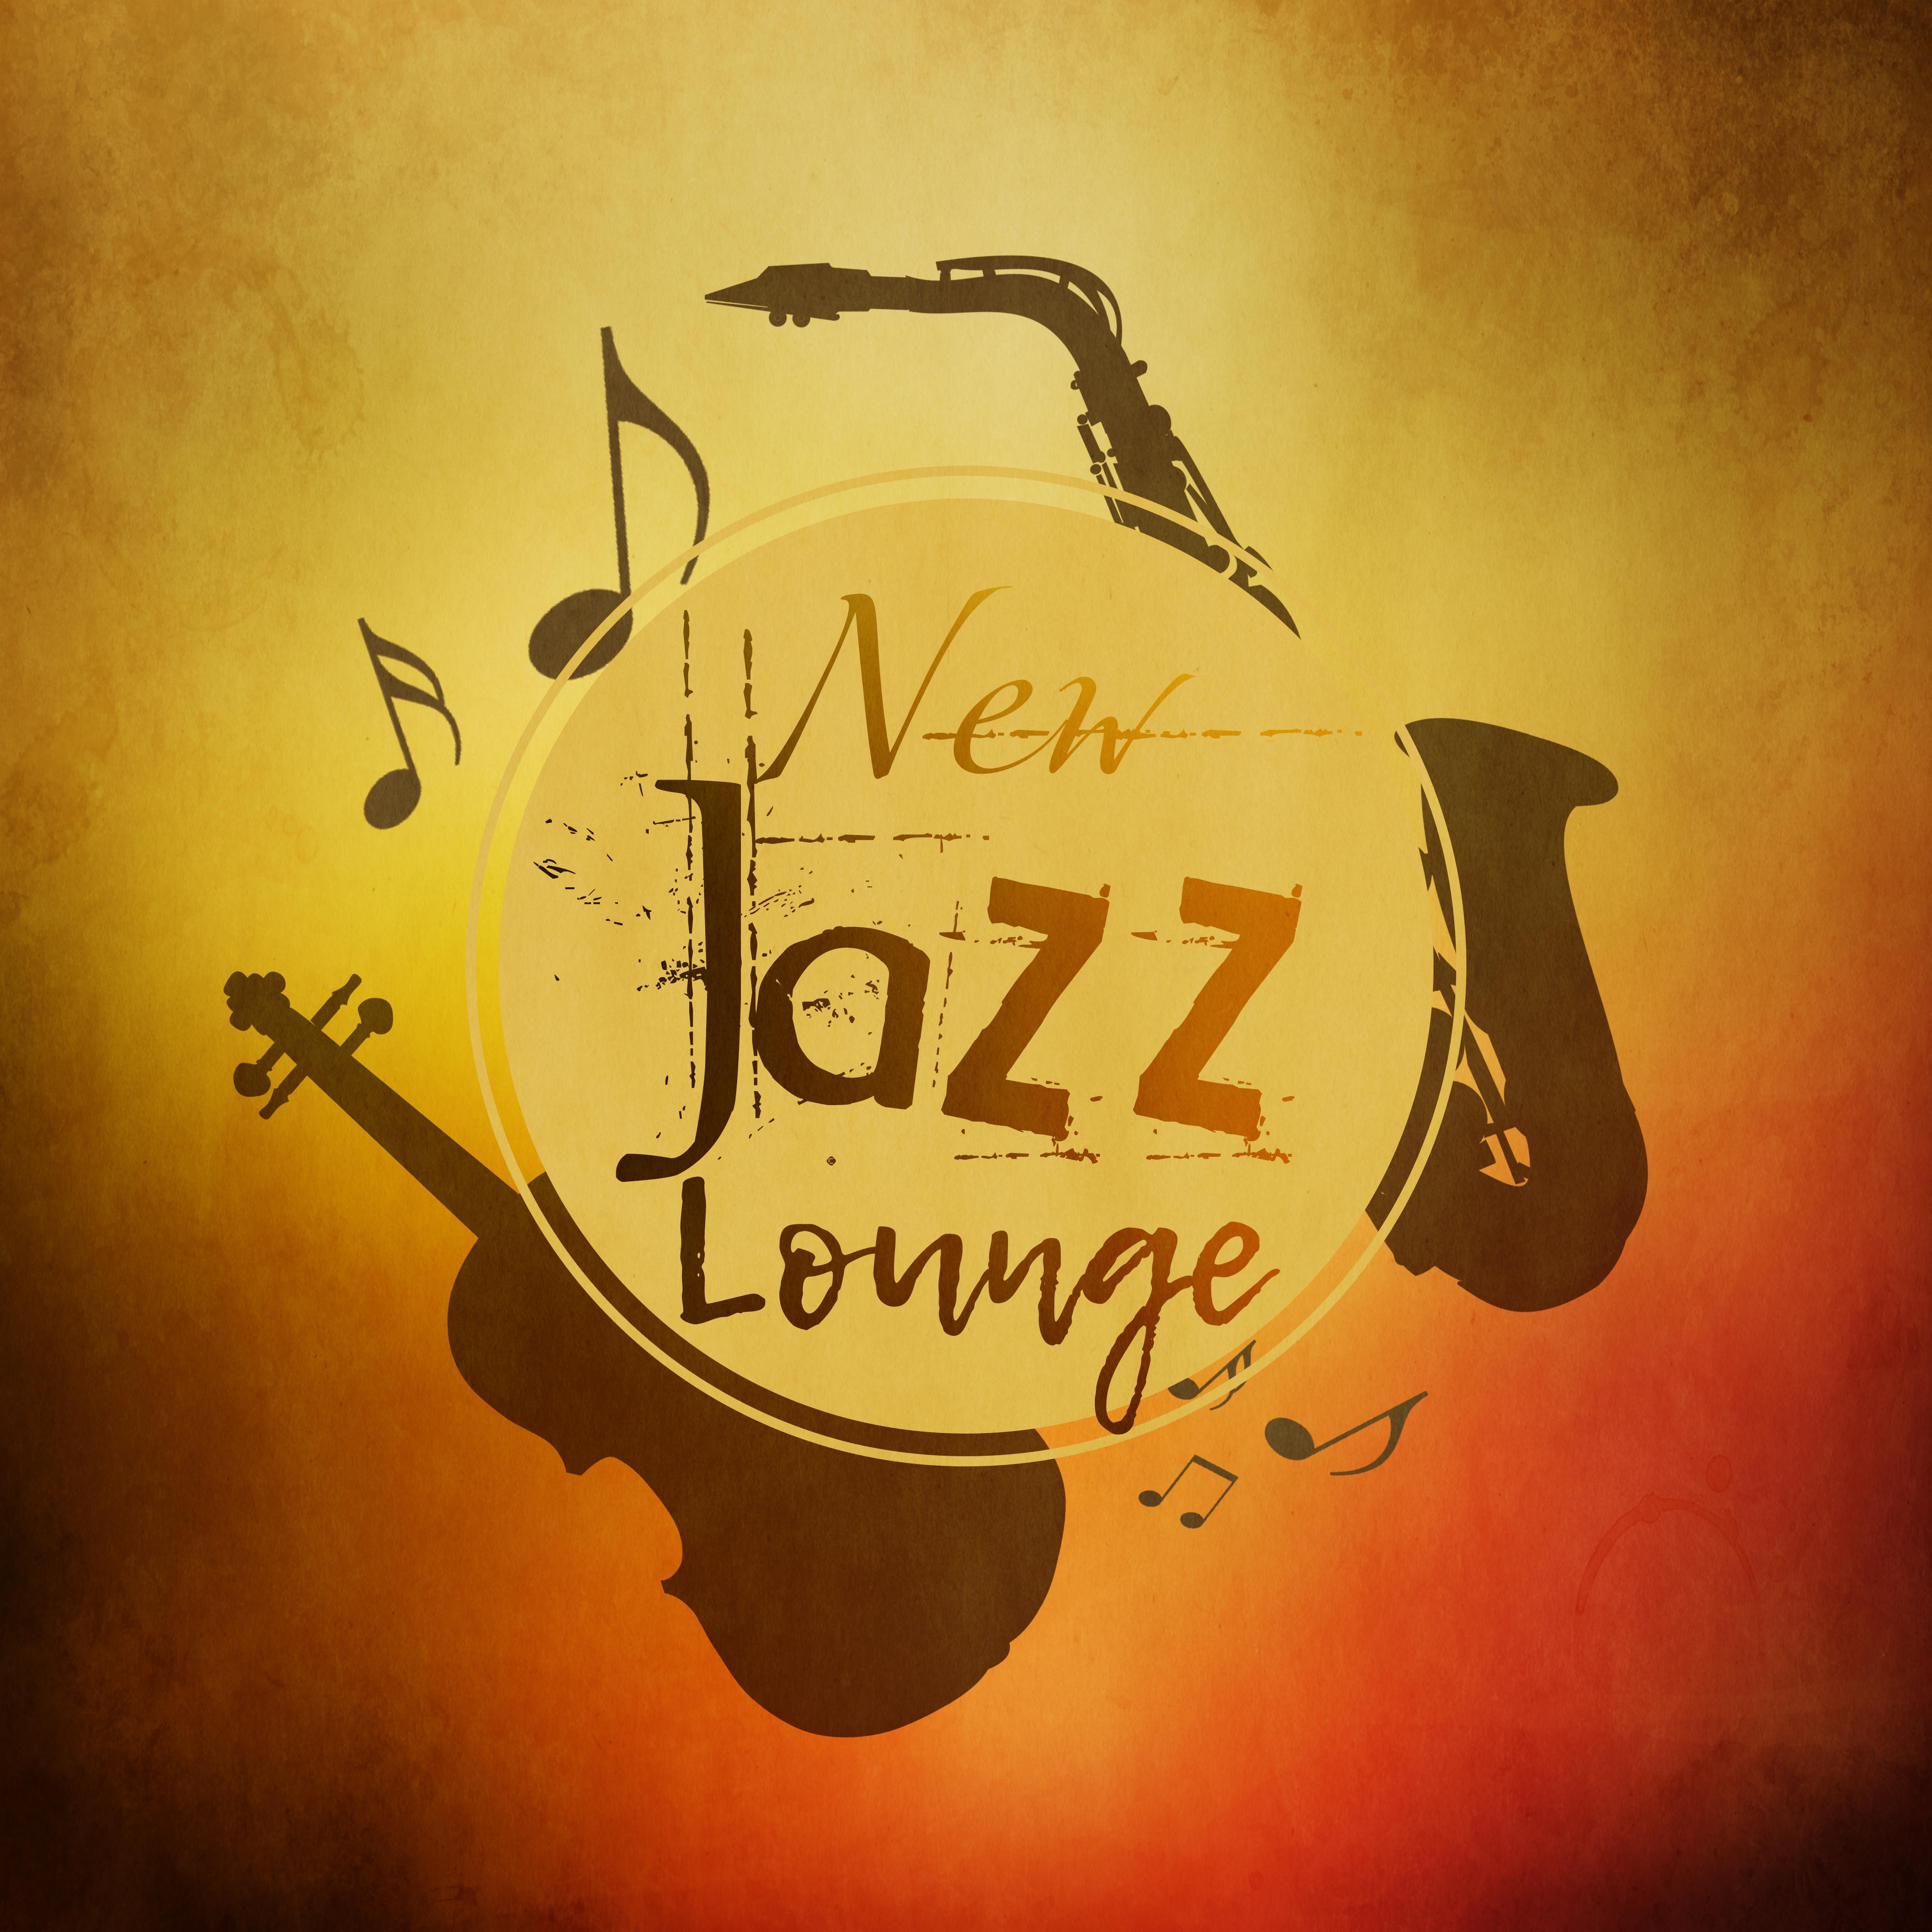 New Jazz Lounge